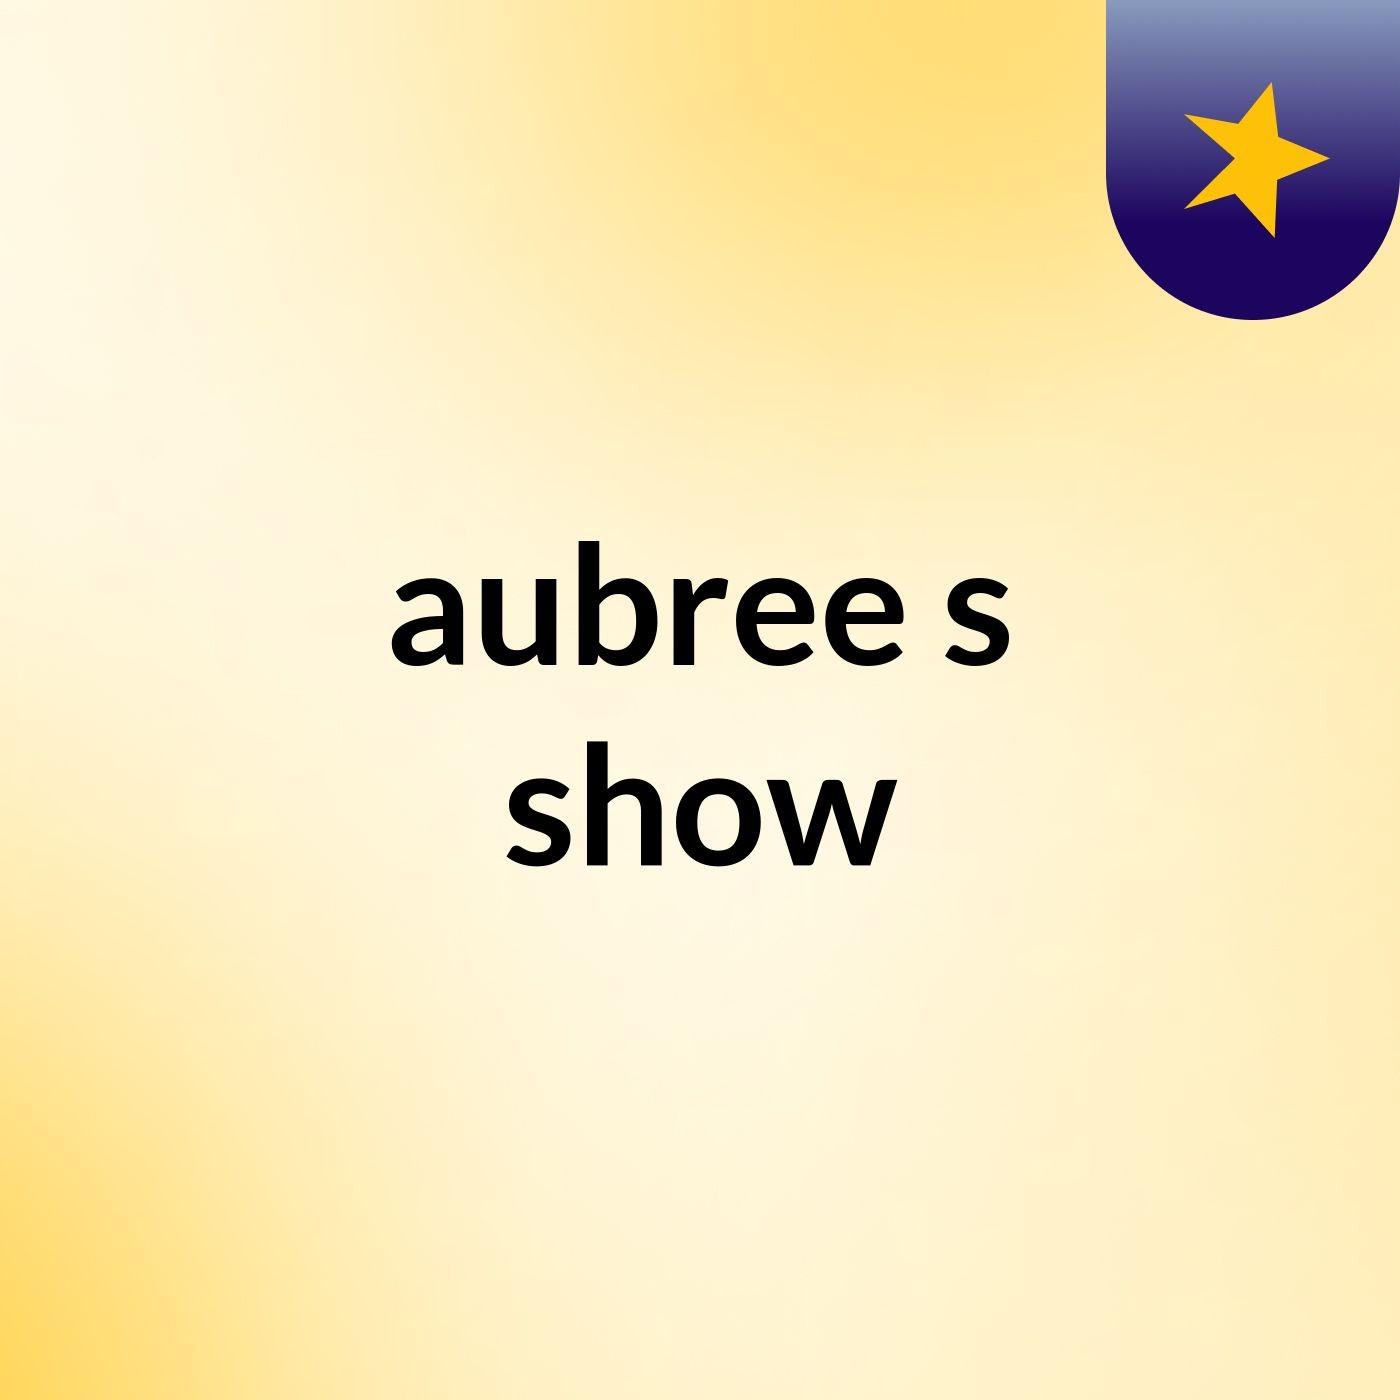 aubree's show